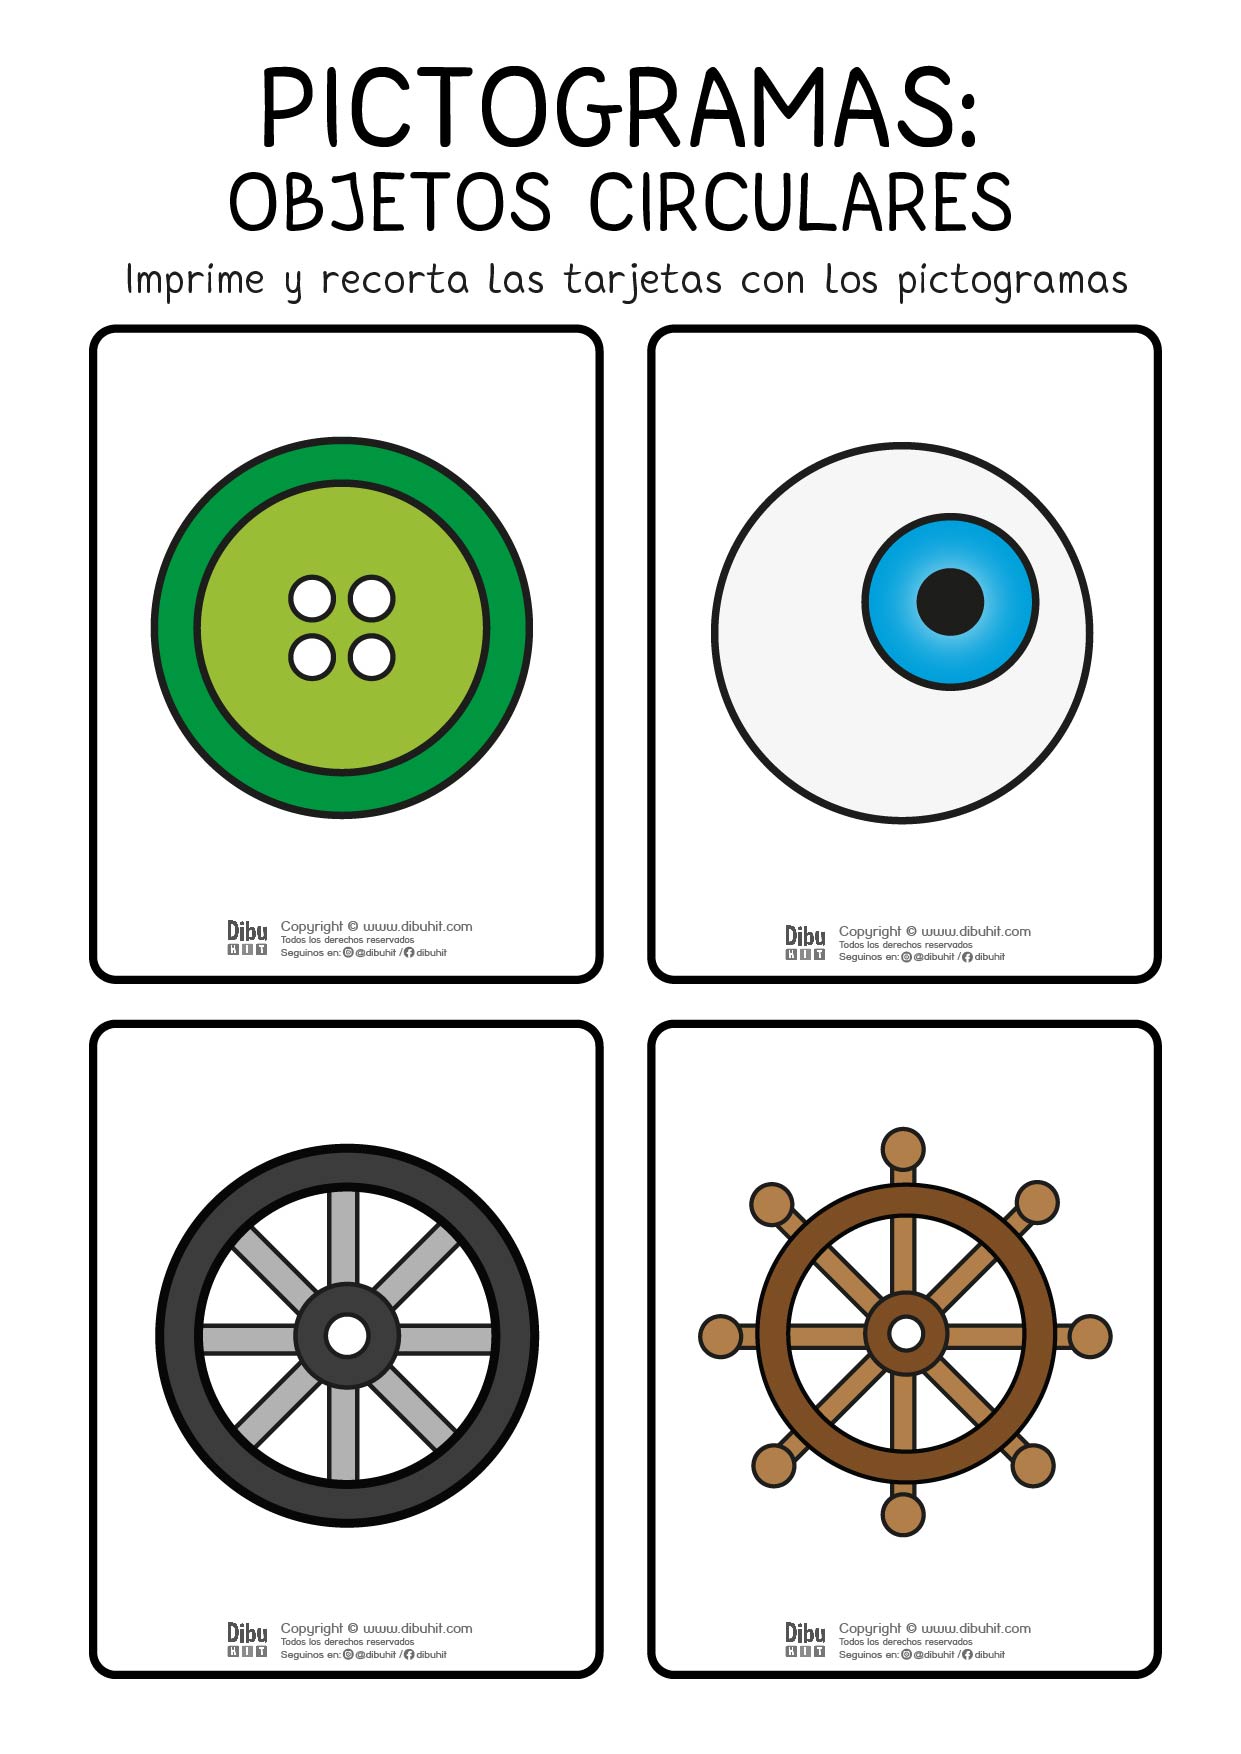 pictograma objetos circulares boton rueda ojo timon